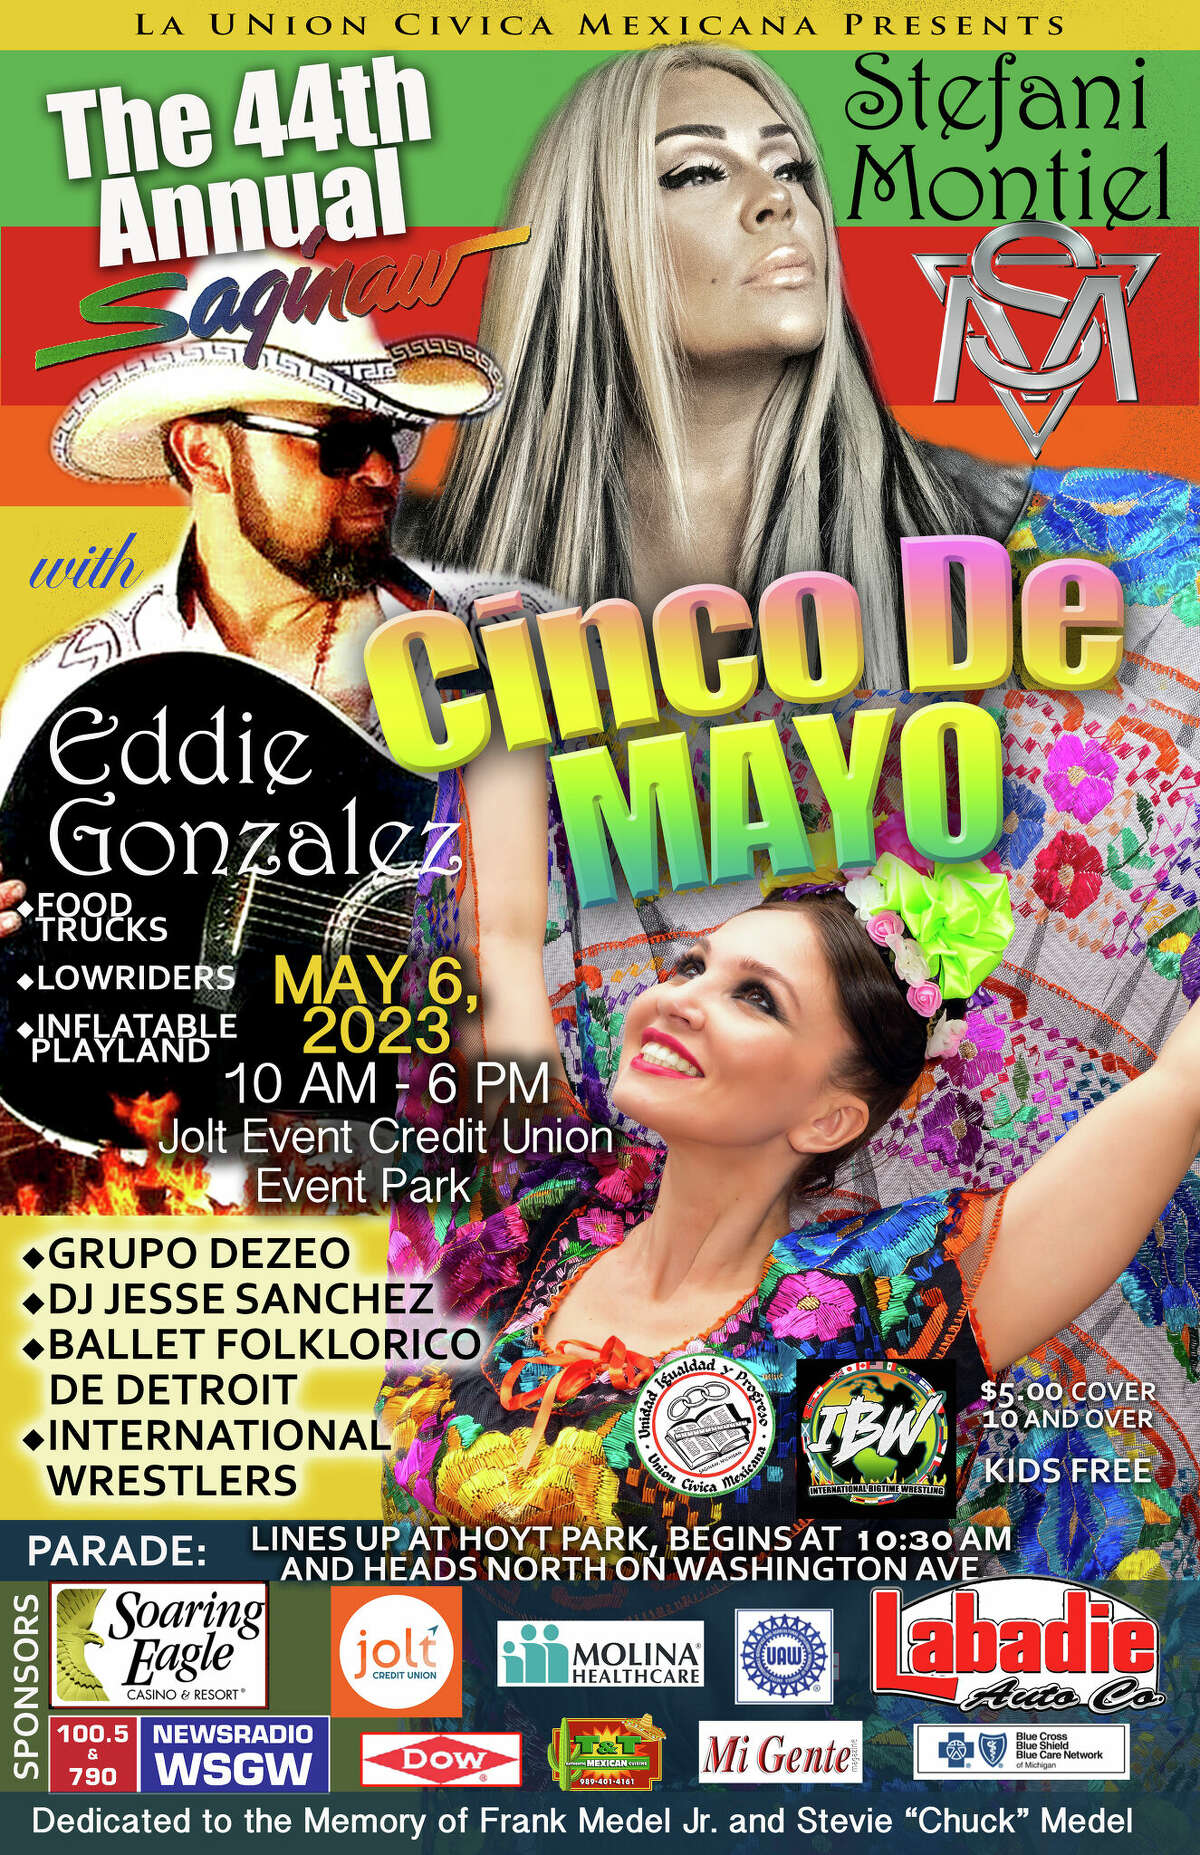 Saginaw Cinco de Mayo parade and festival set for May 6